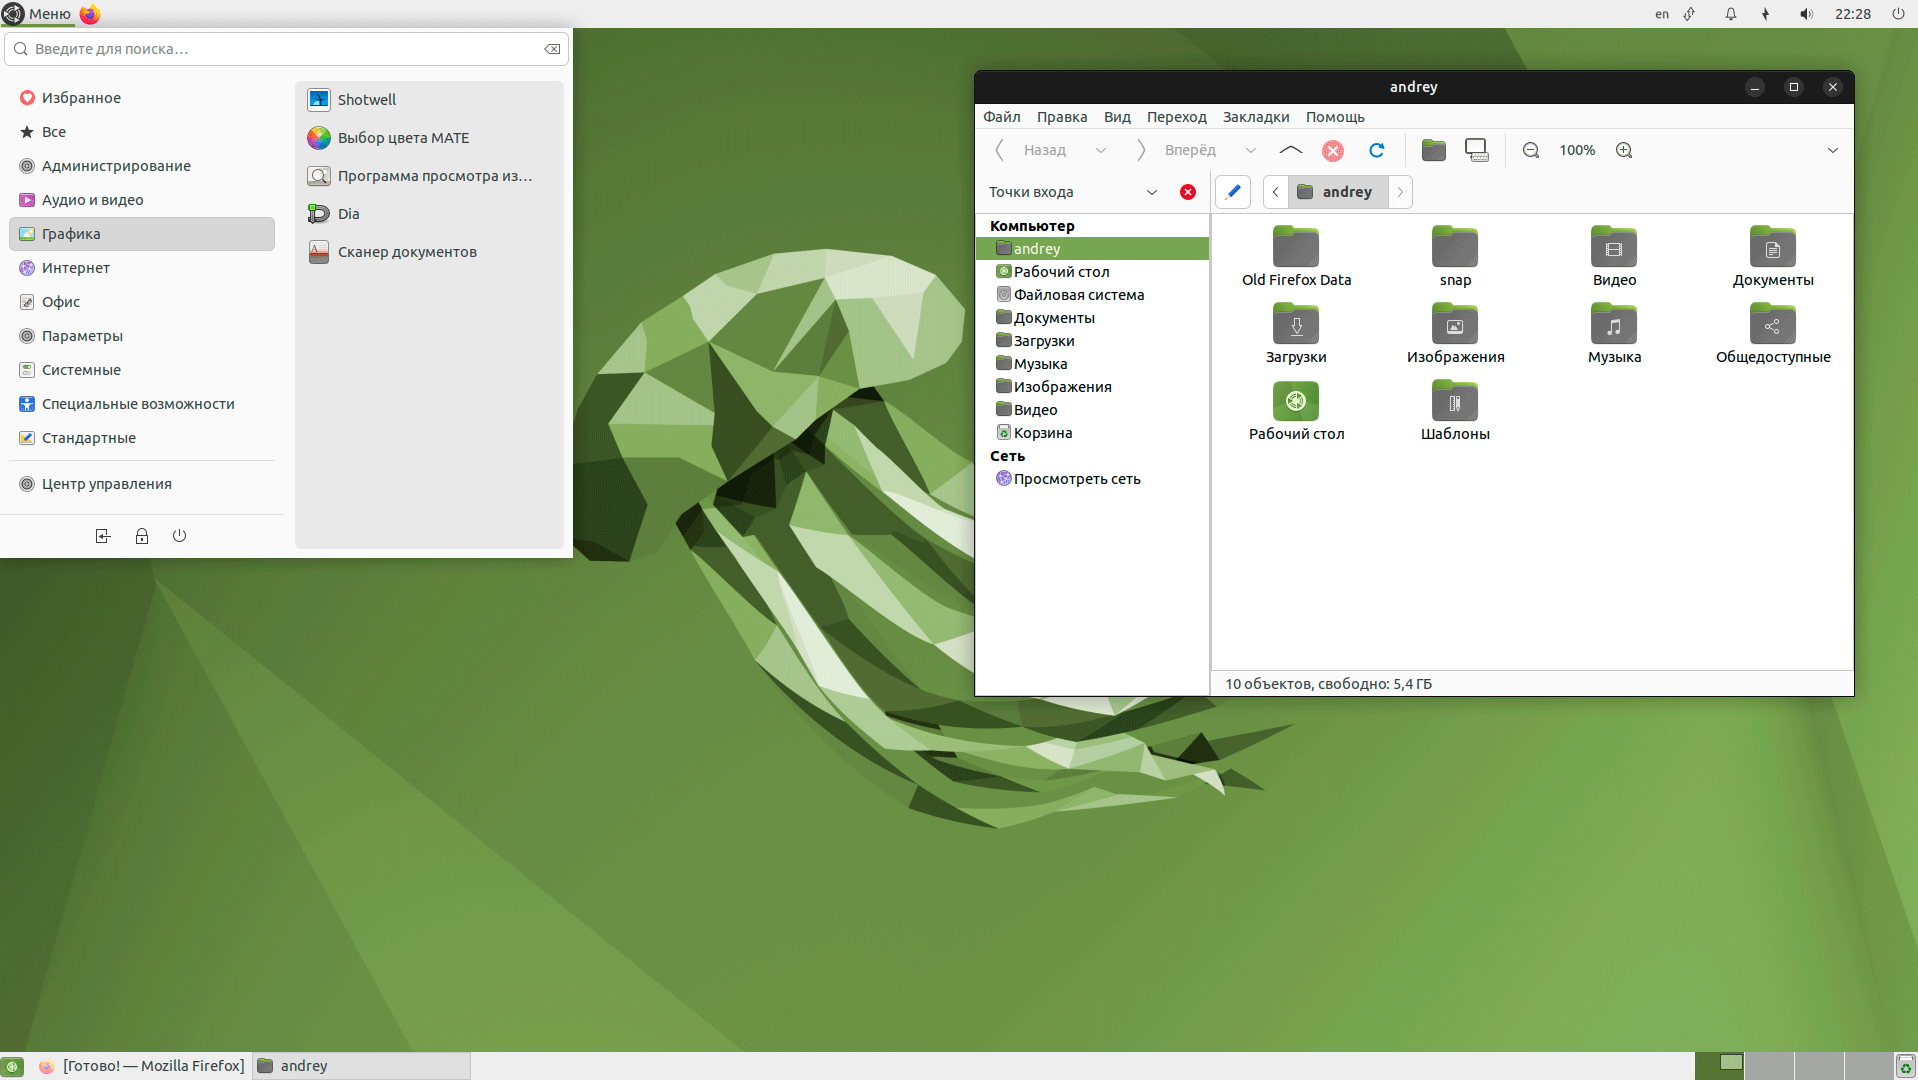 https://interface31.ru/tech_it/images/Linux-desktop-environment-overview-020.png